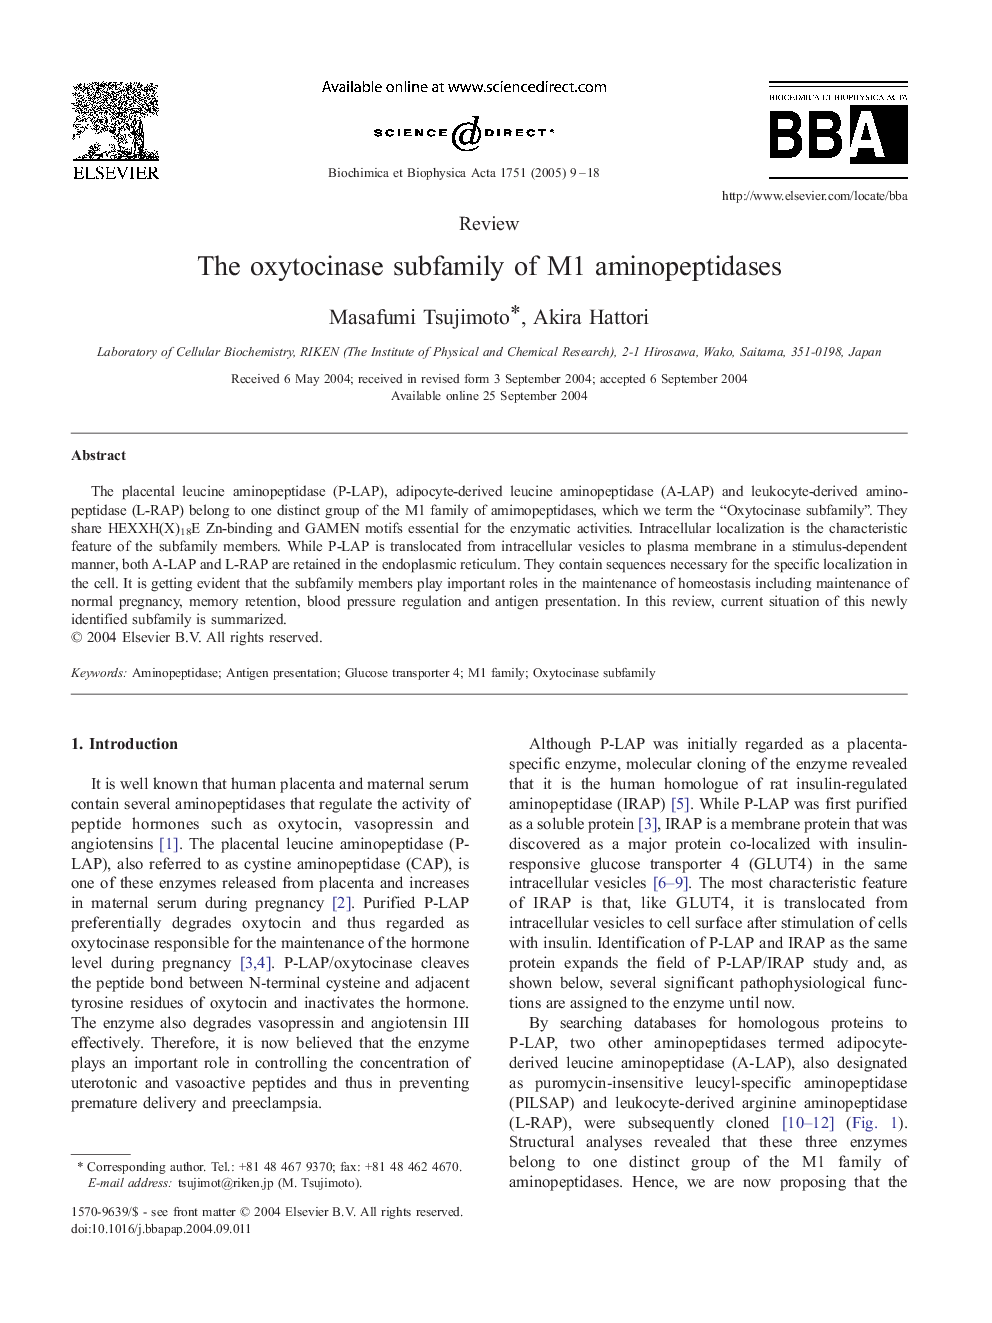 The oxytocinase subfamily of M1 aminopeptidases